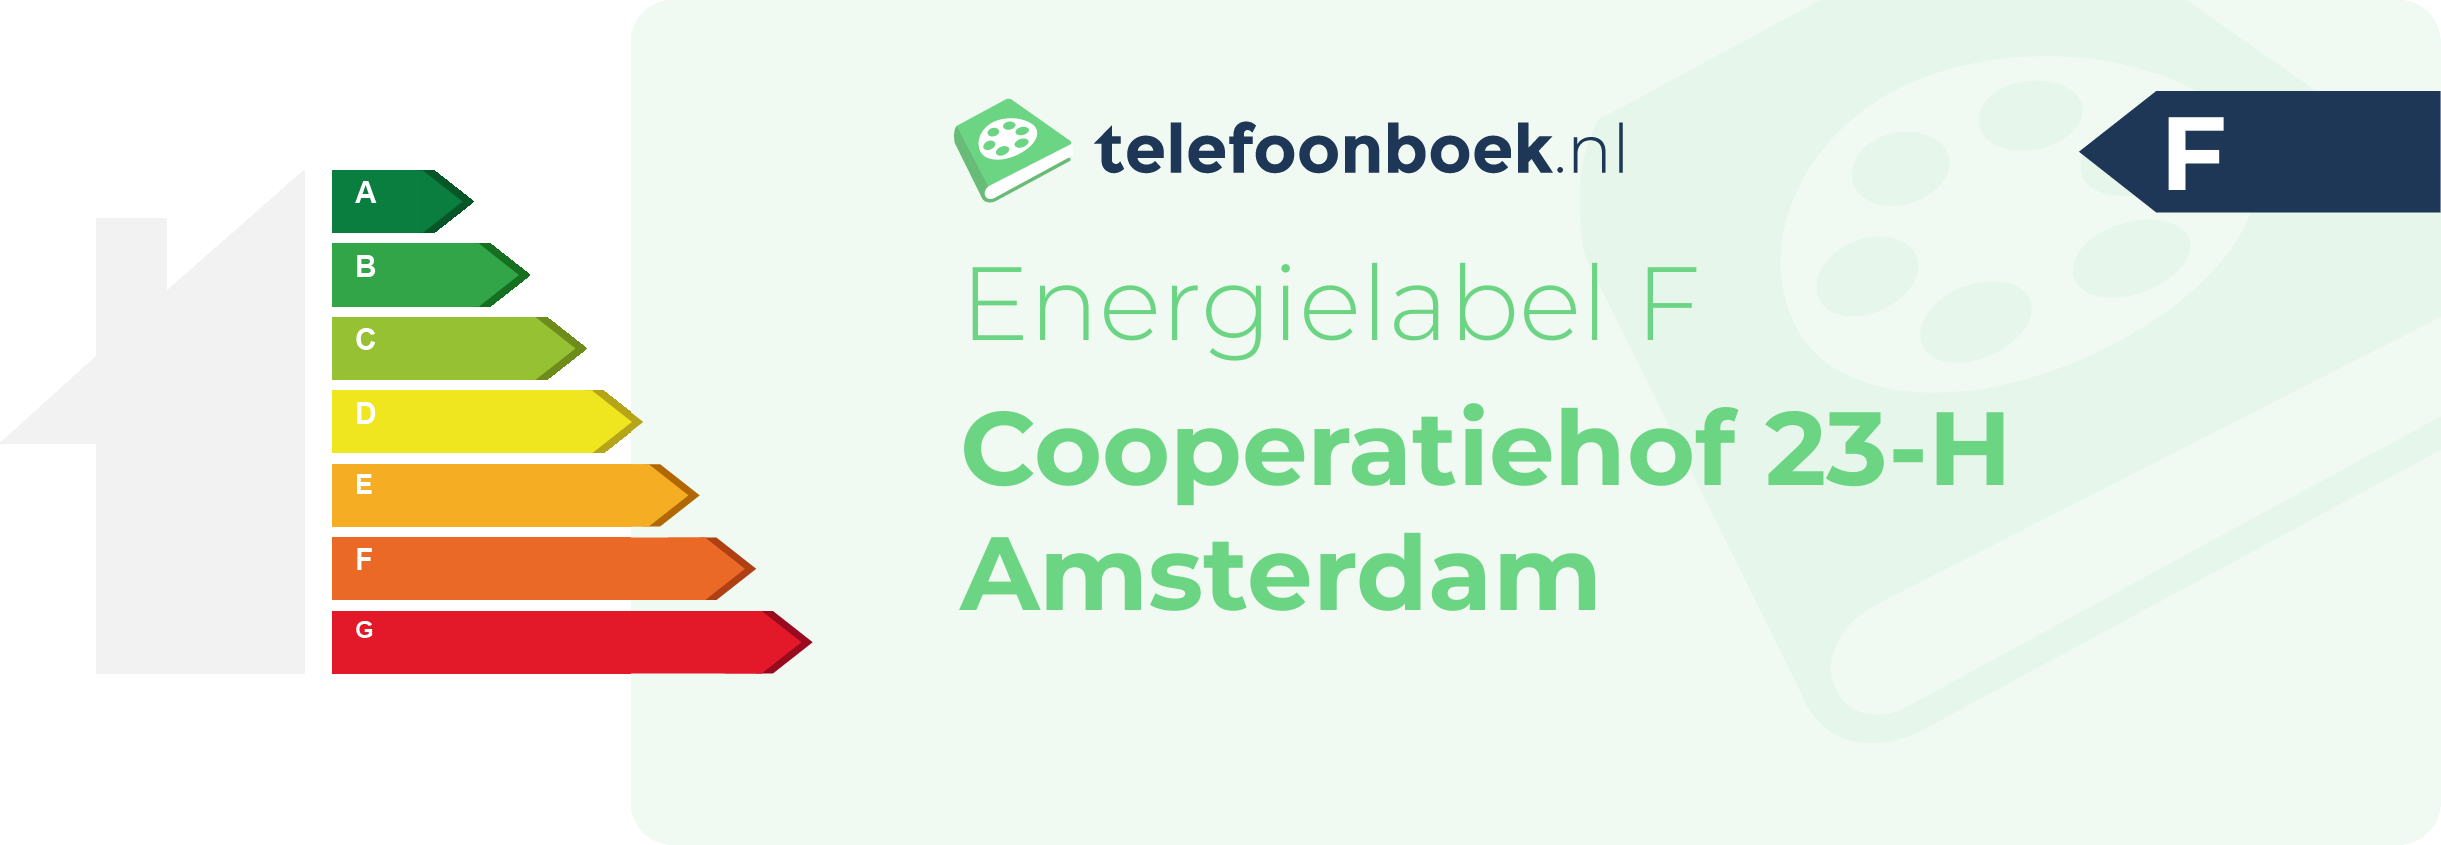 Energielabel Cooperatiehof 23-H Amsterdam